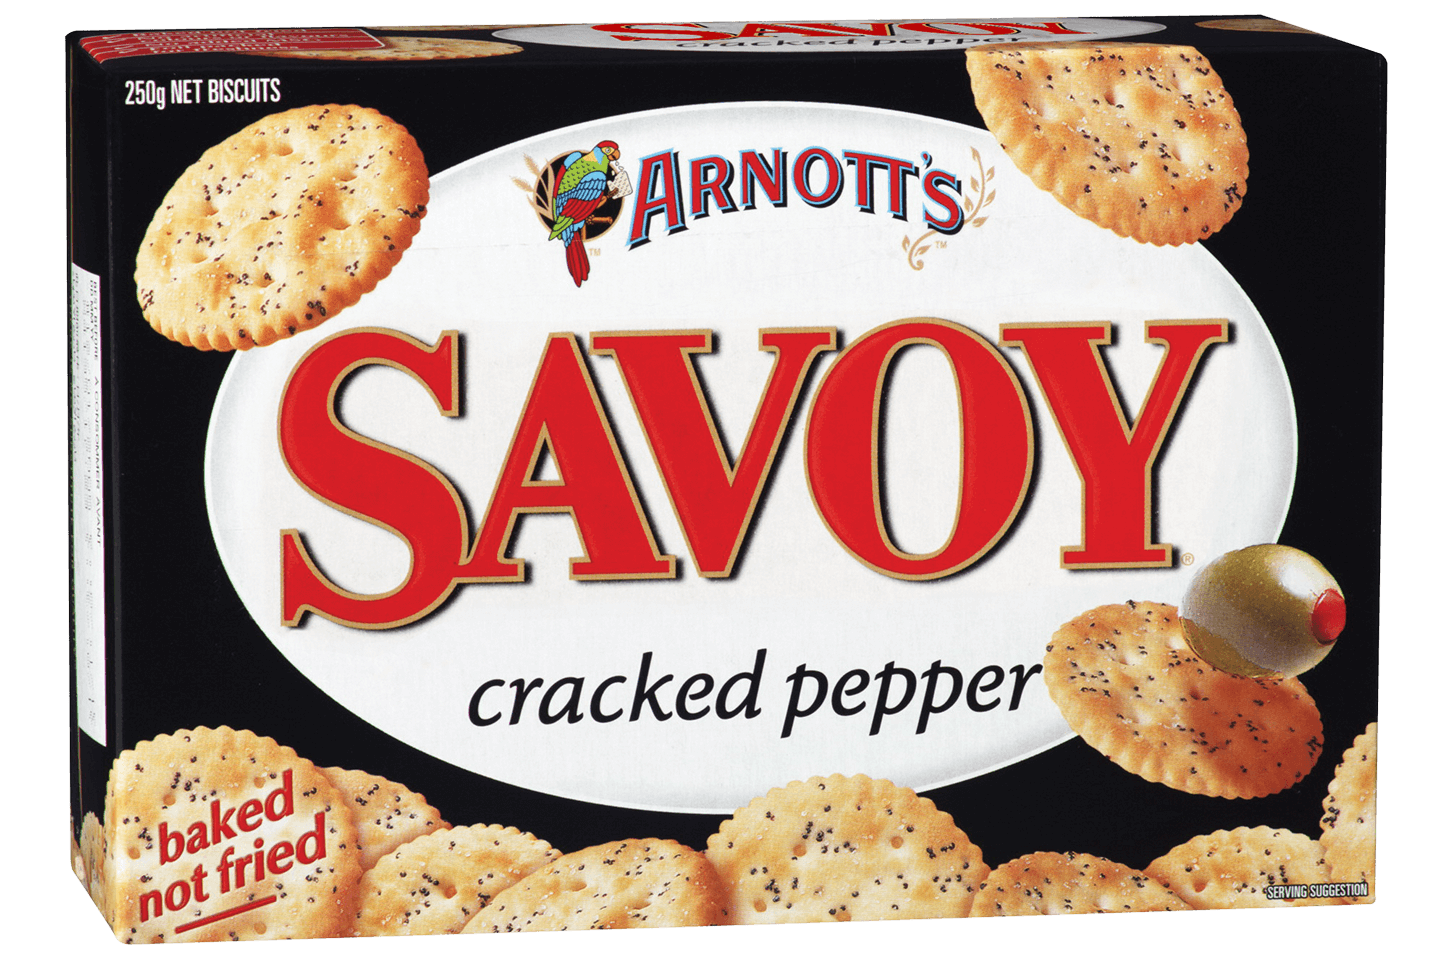 Savoy Cracked Pepper